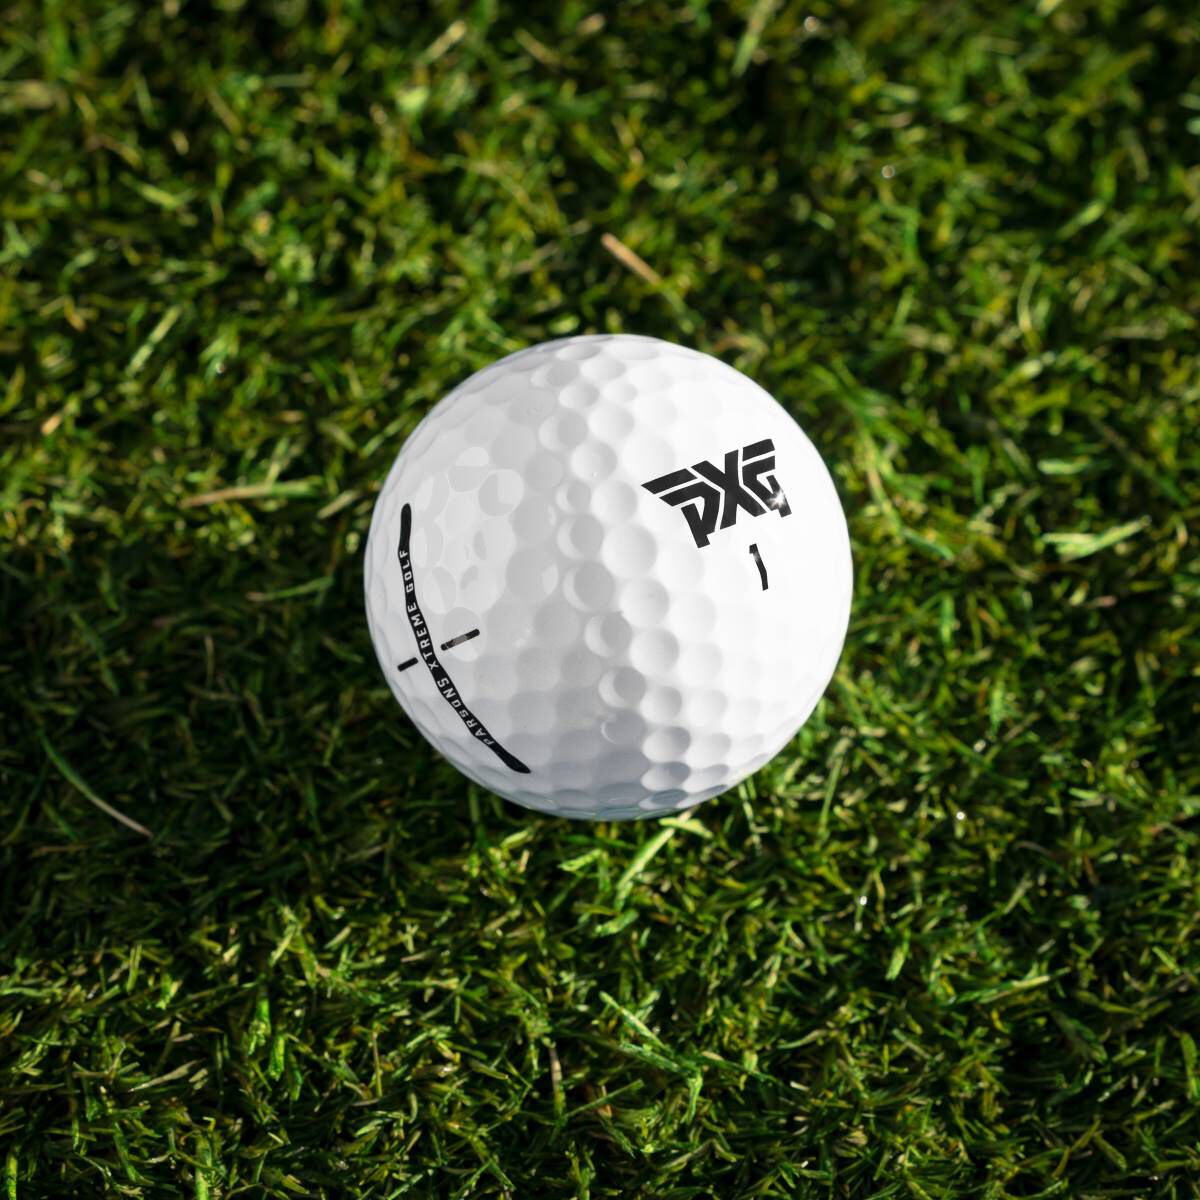 PXG Xtreme Premium Golf Balls - USMC 